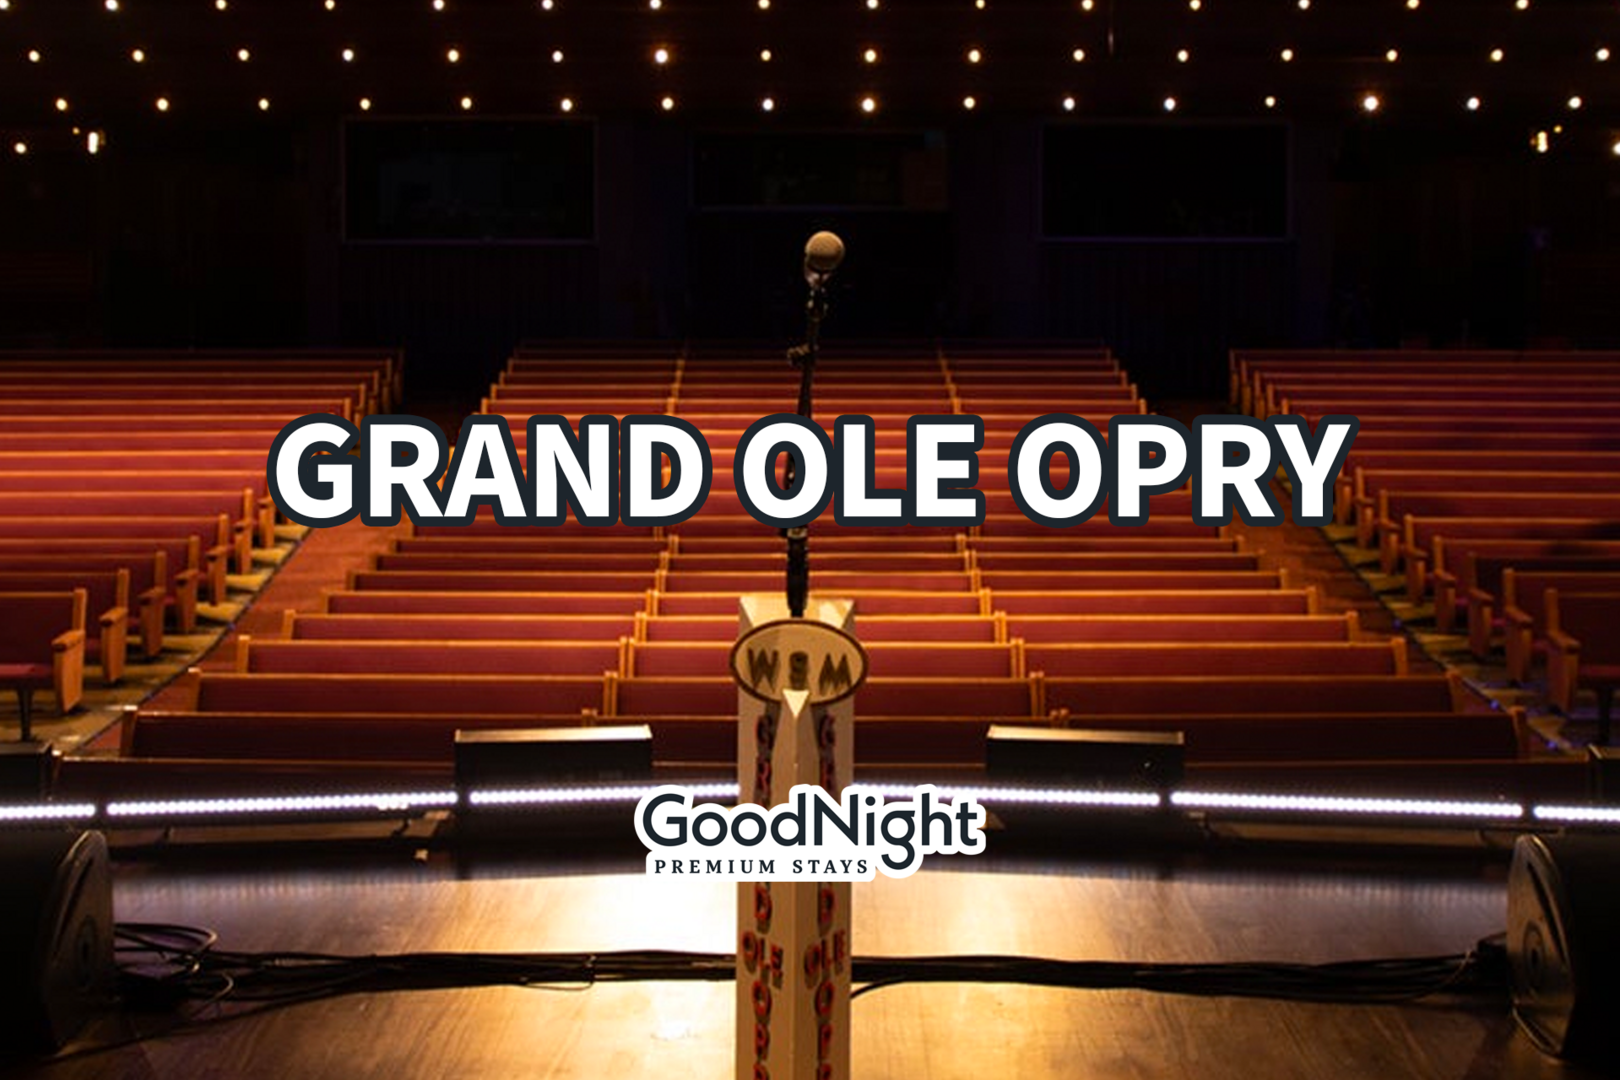 18 mins: Grand Ole Opry